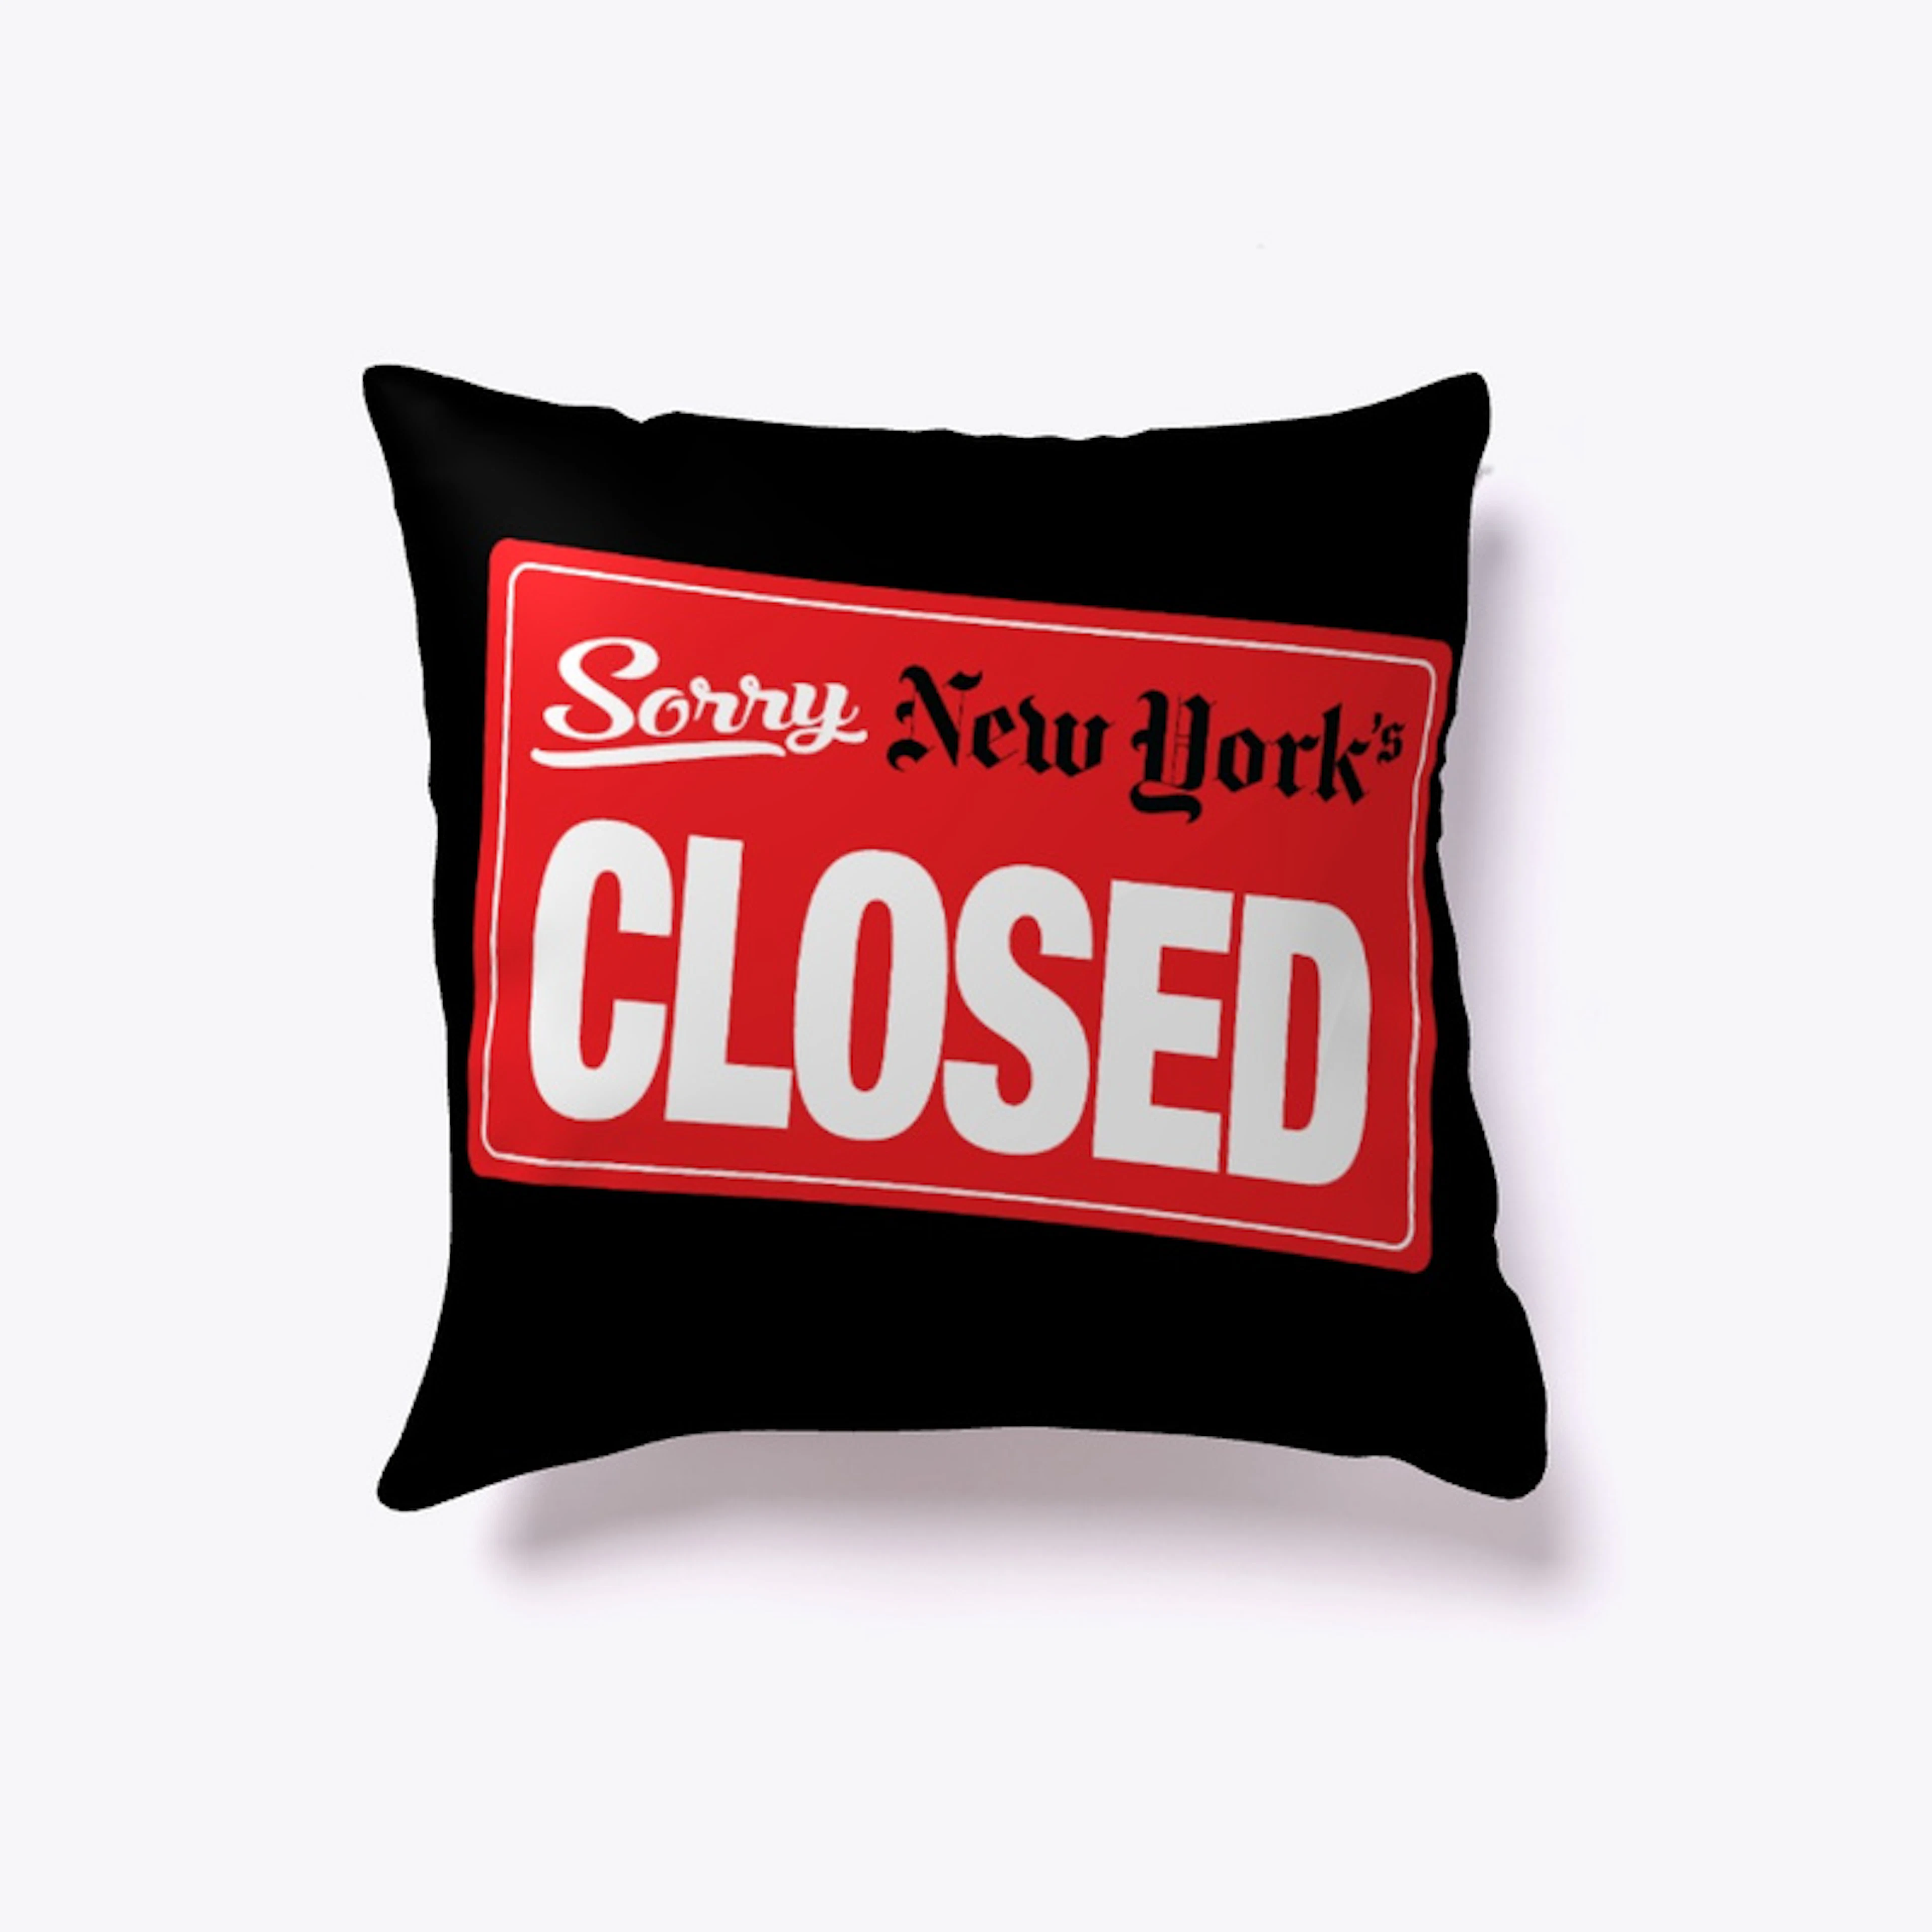 New York's Closed-black